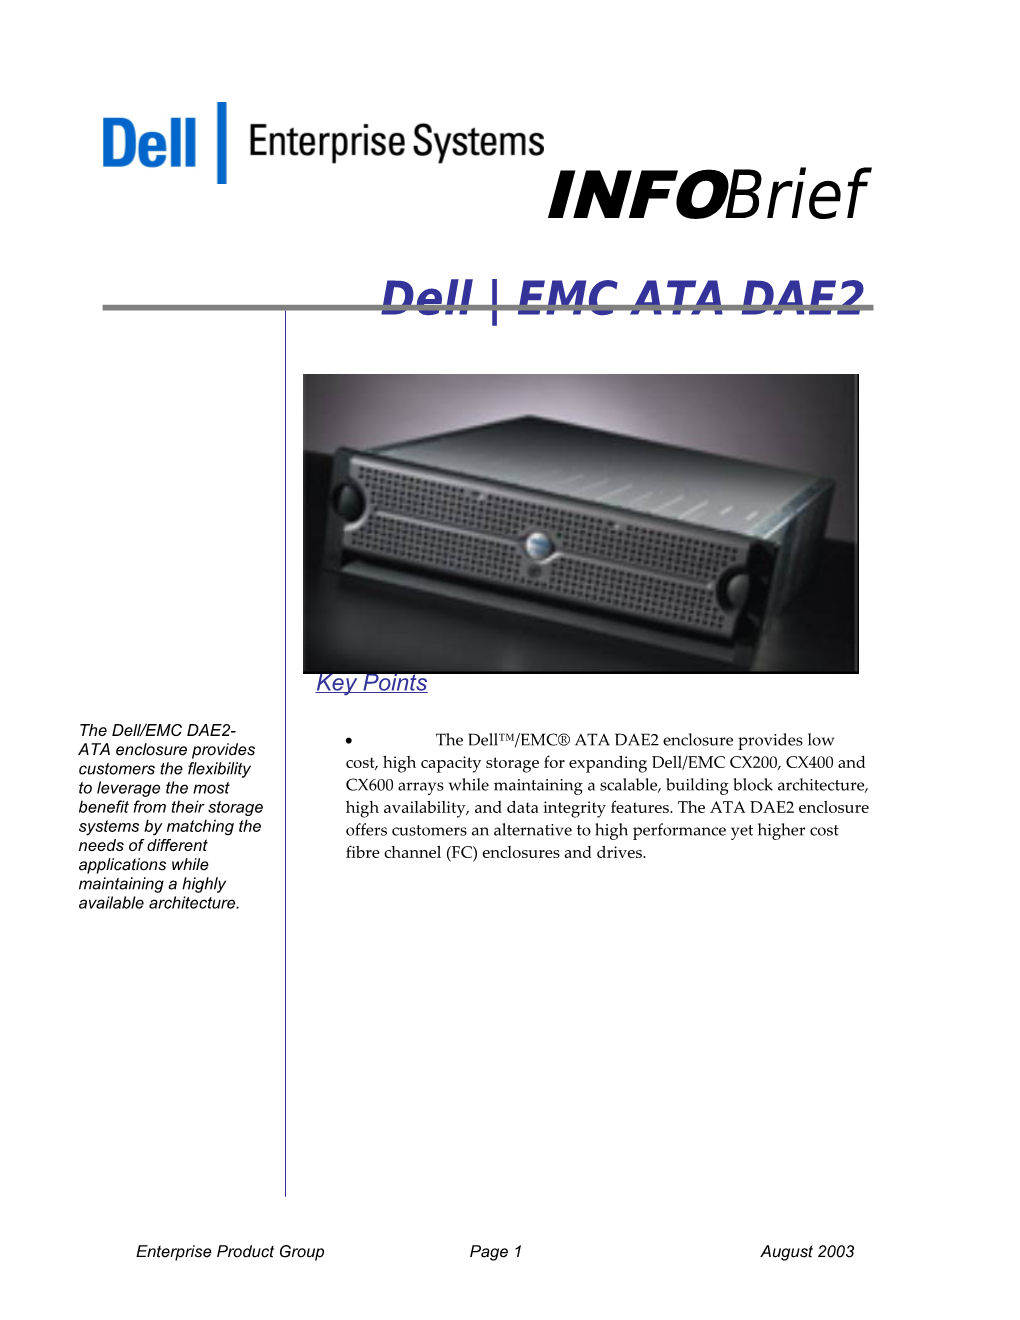 Dell EMC ATA DAE2